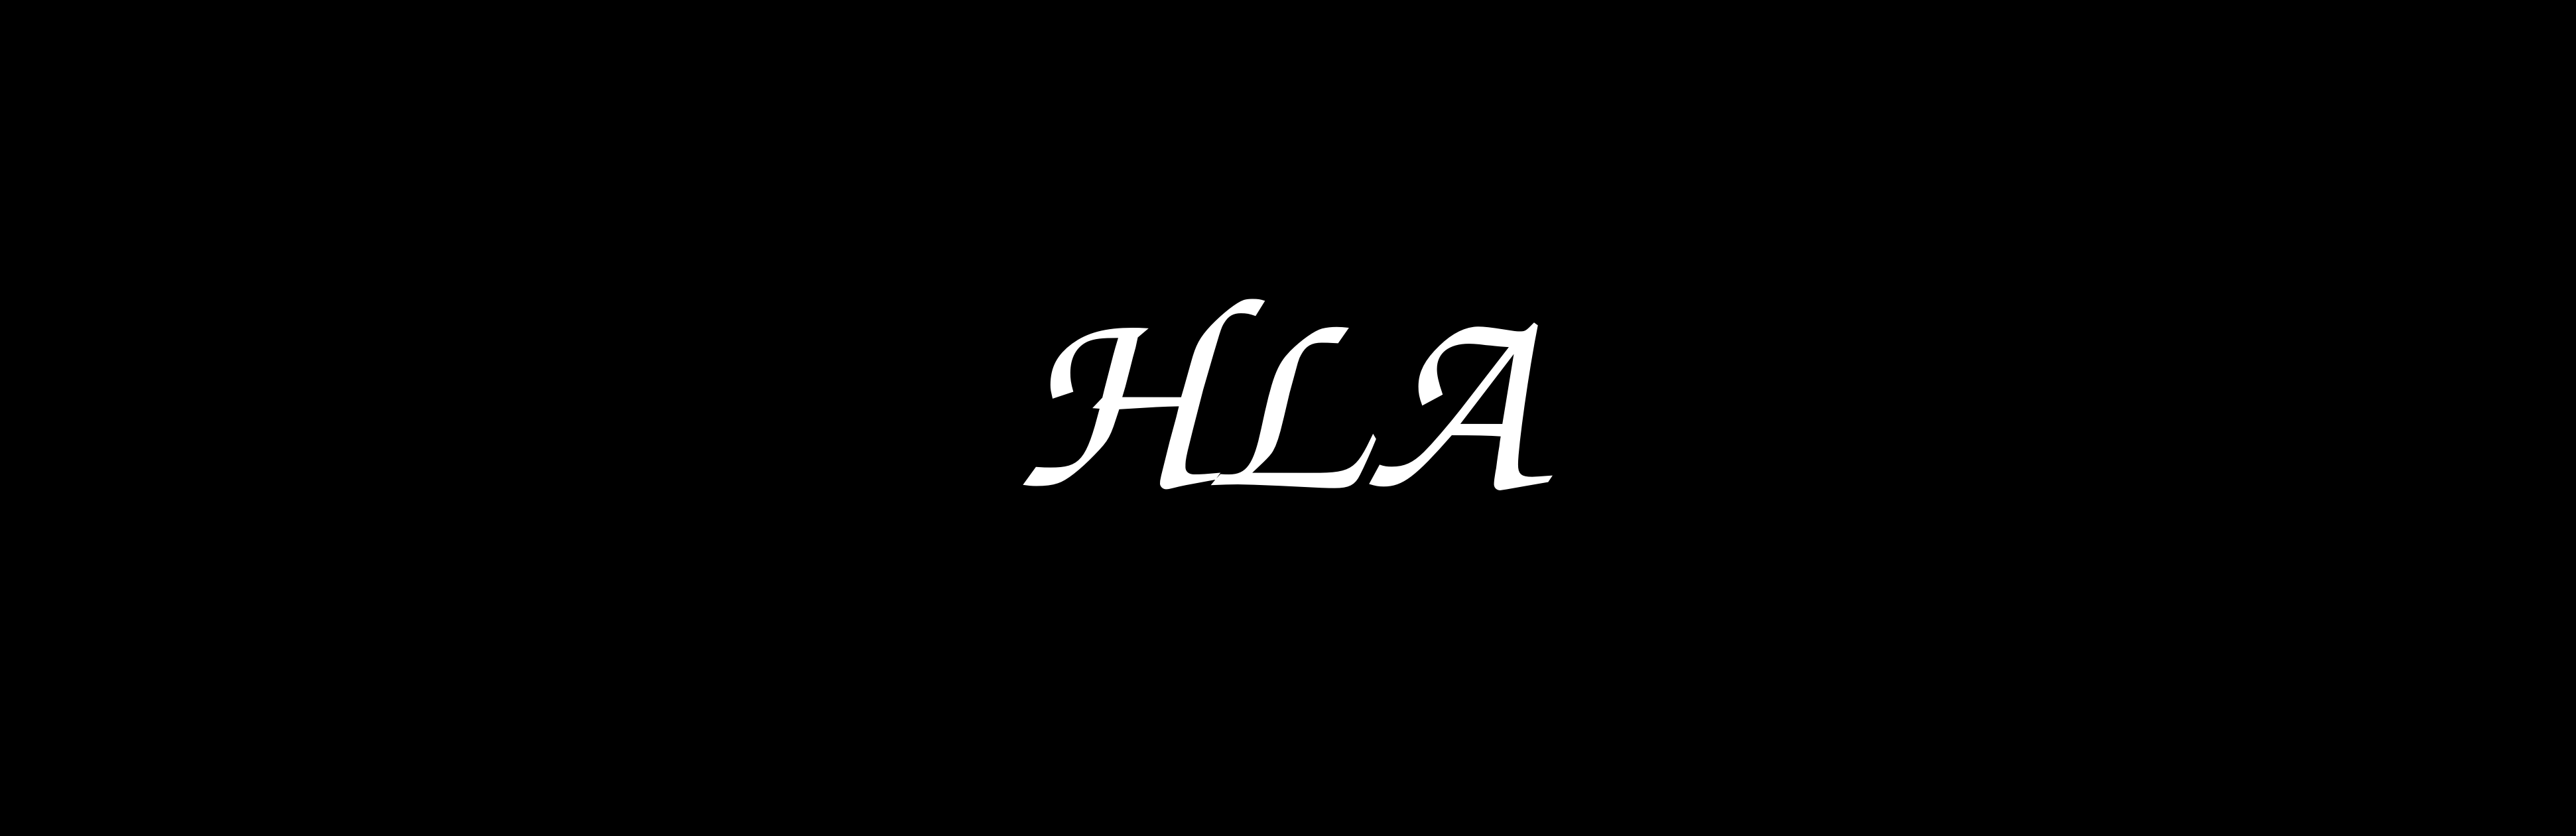 hla_logo.png